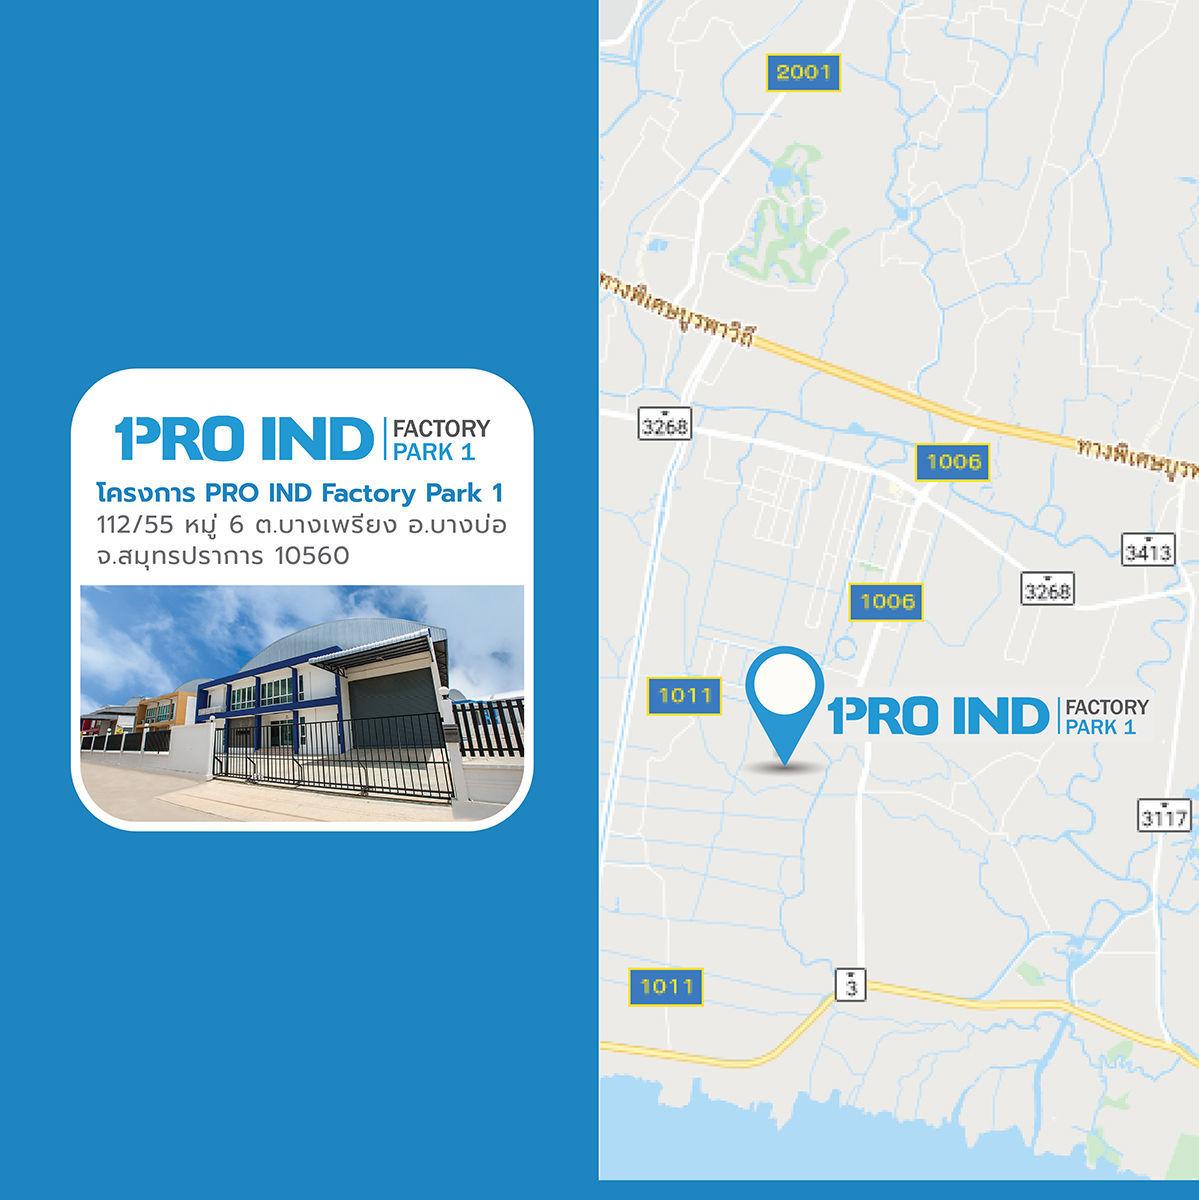 Pro Ind Factory Park 1 google map